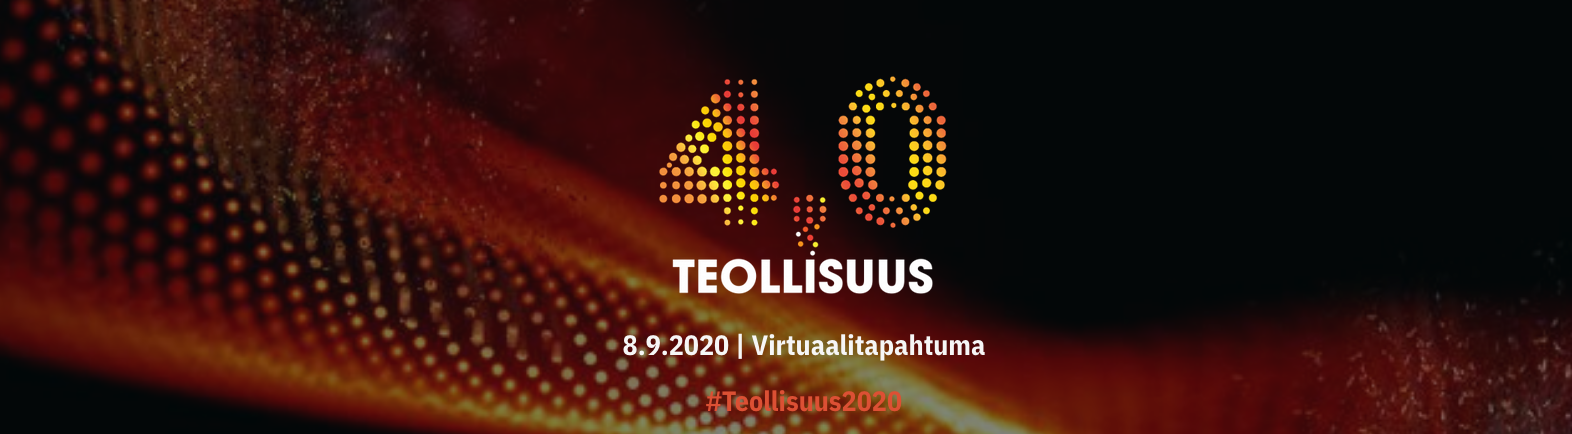 Meet haltian at Teollisuus 4.0 virtual event